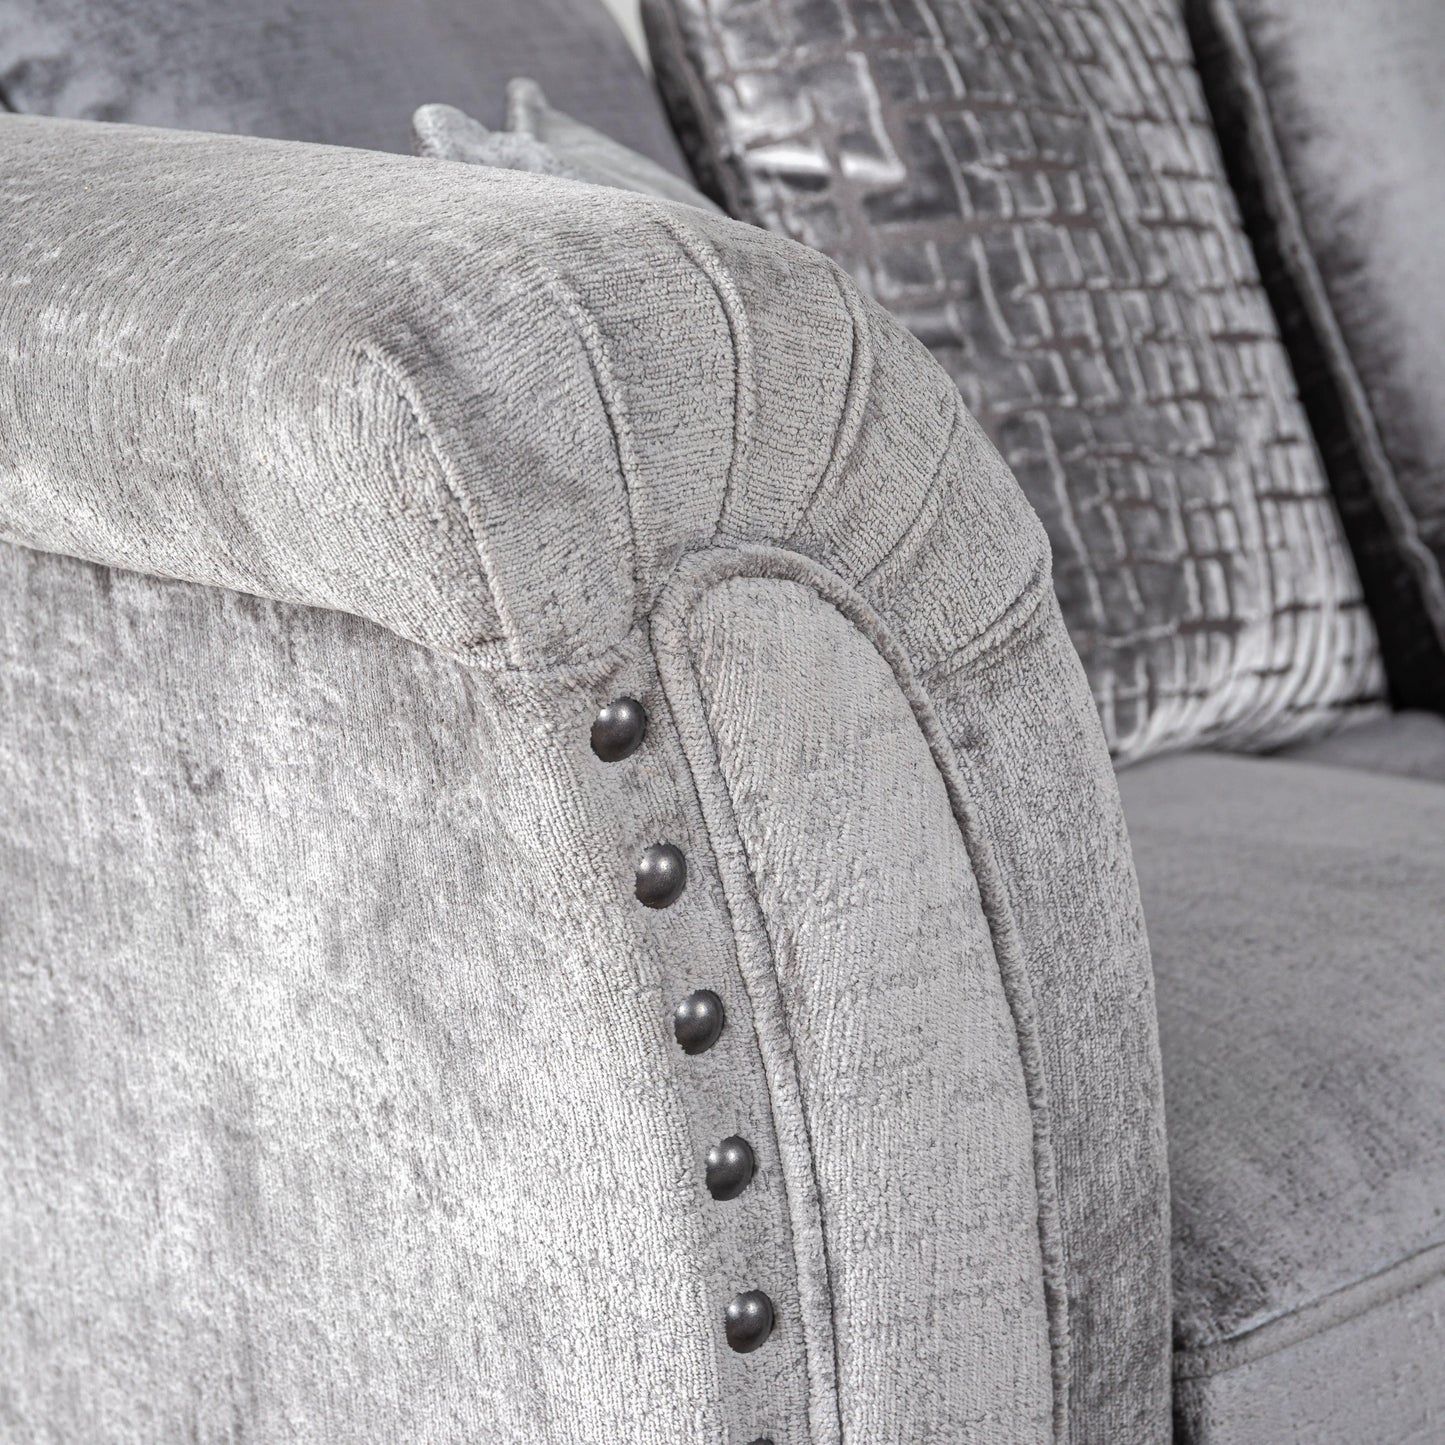 Furniture  -  Provence Grey Corner Sofa  -  50152009